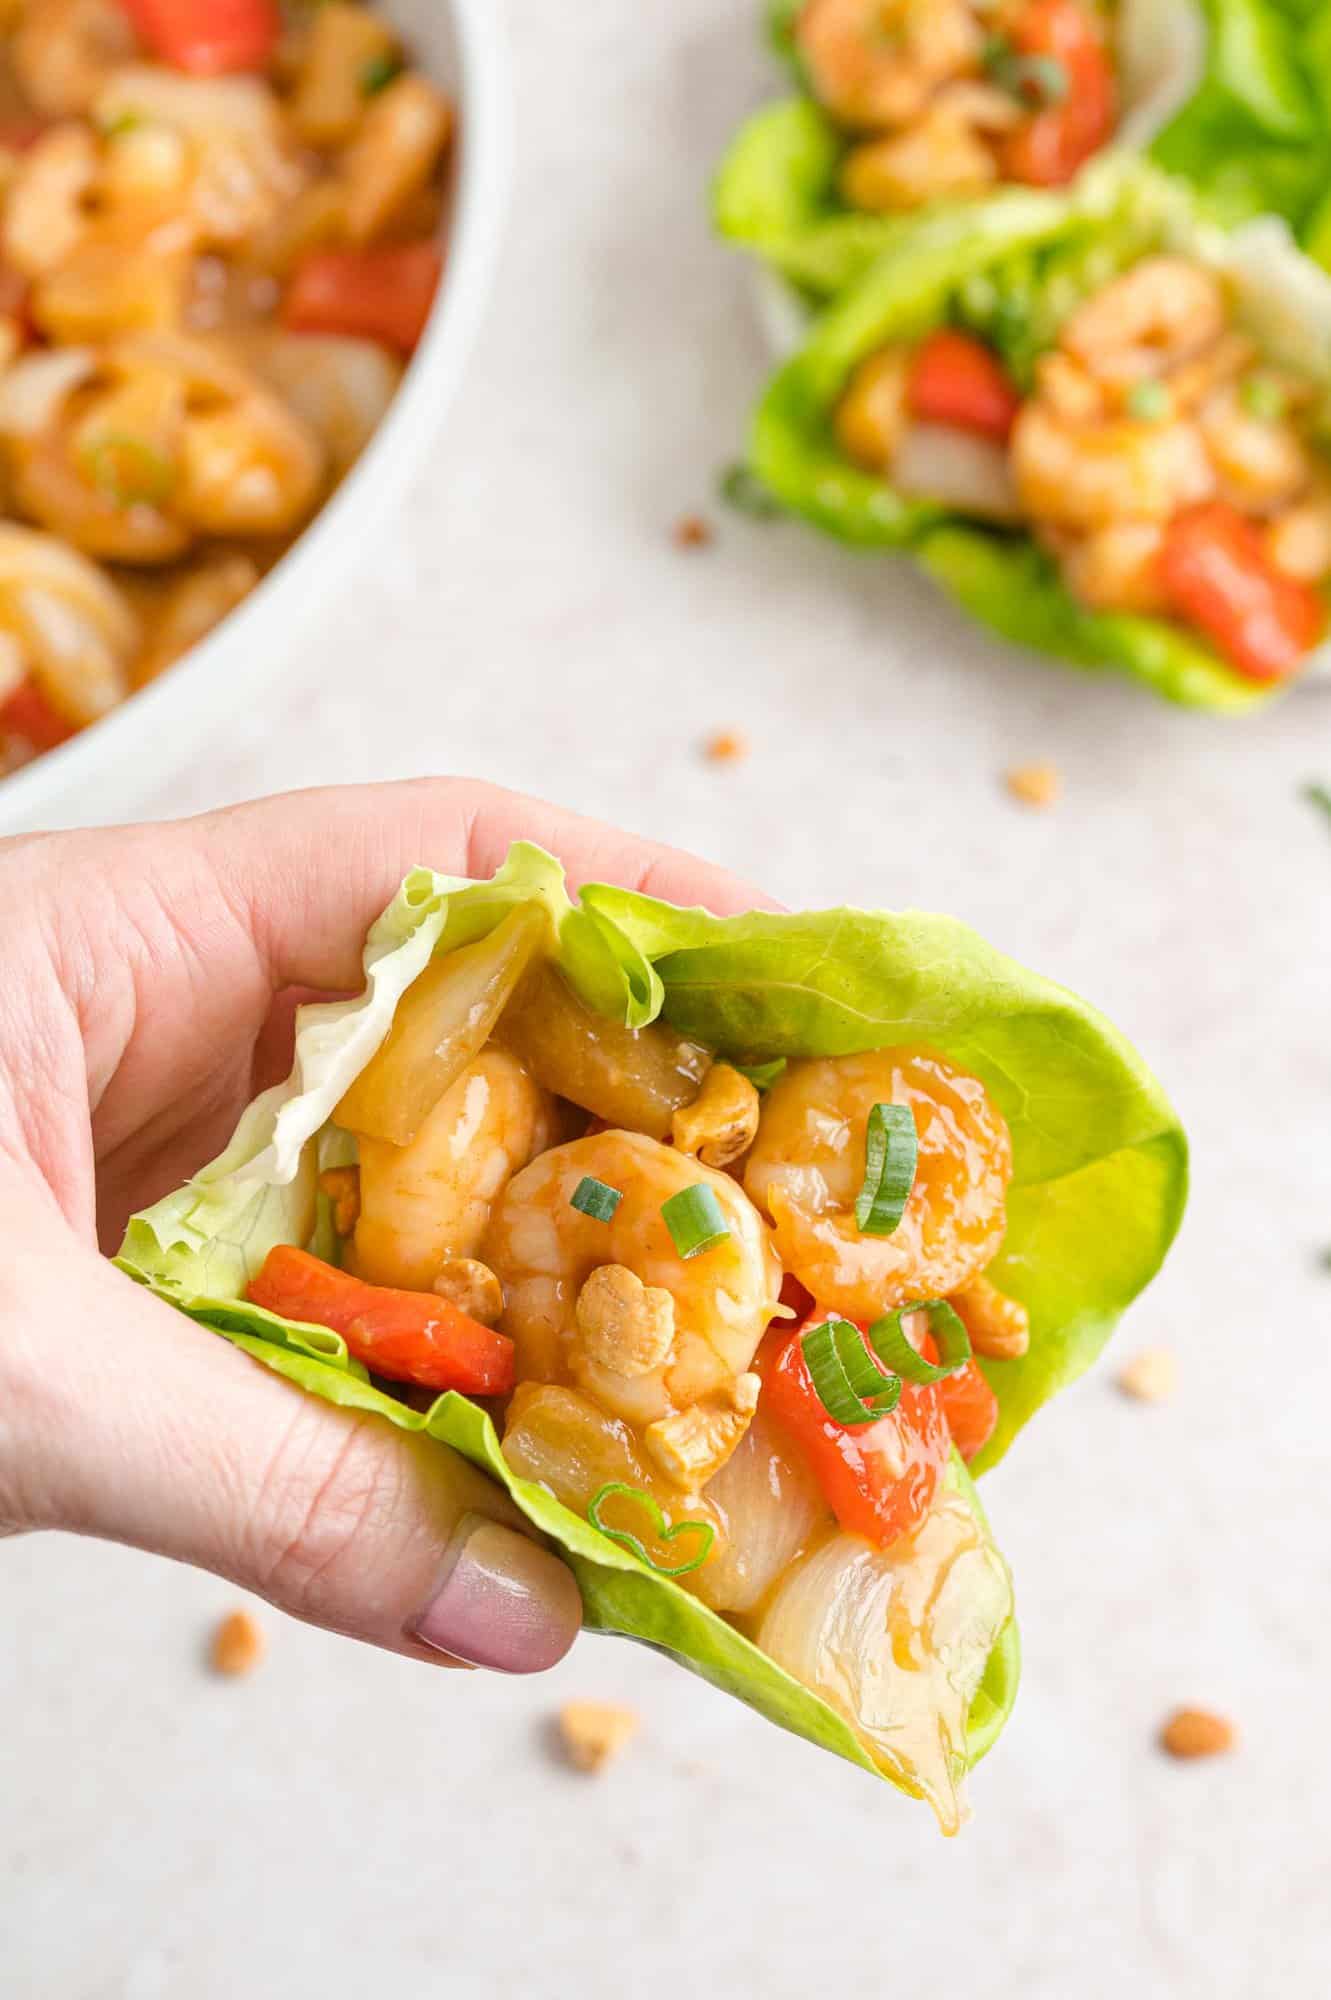 Shrimp lettuce wrap held in a hand.